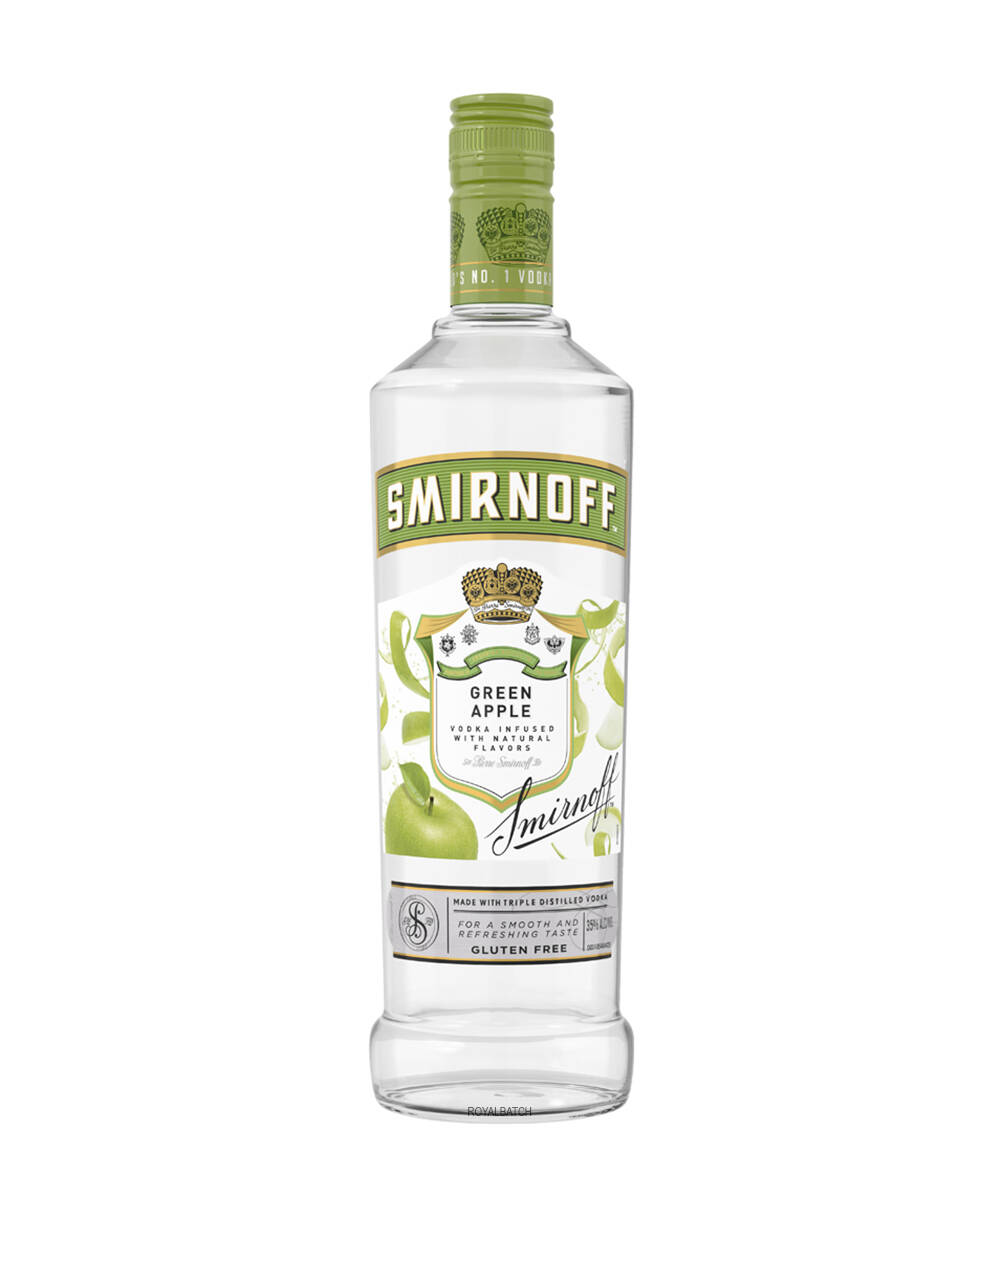 Smirnoff Green Apple Infused Flavored Vodka